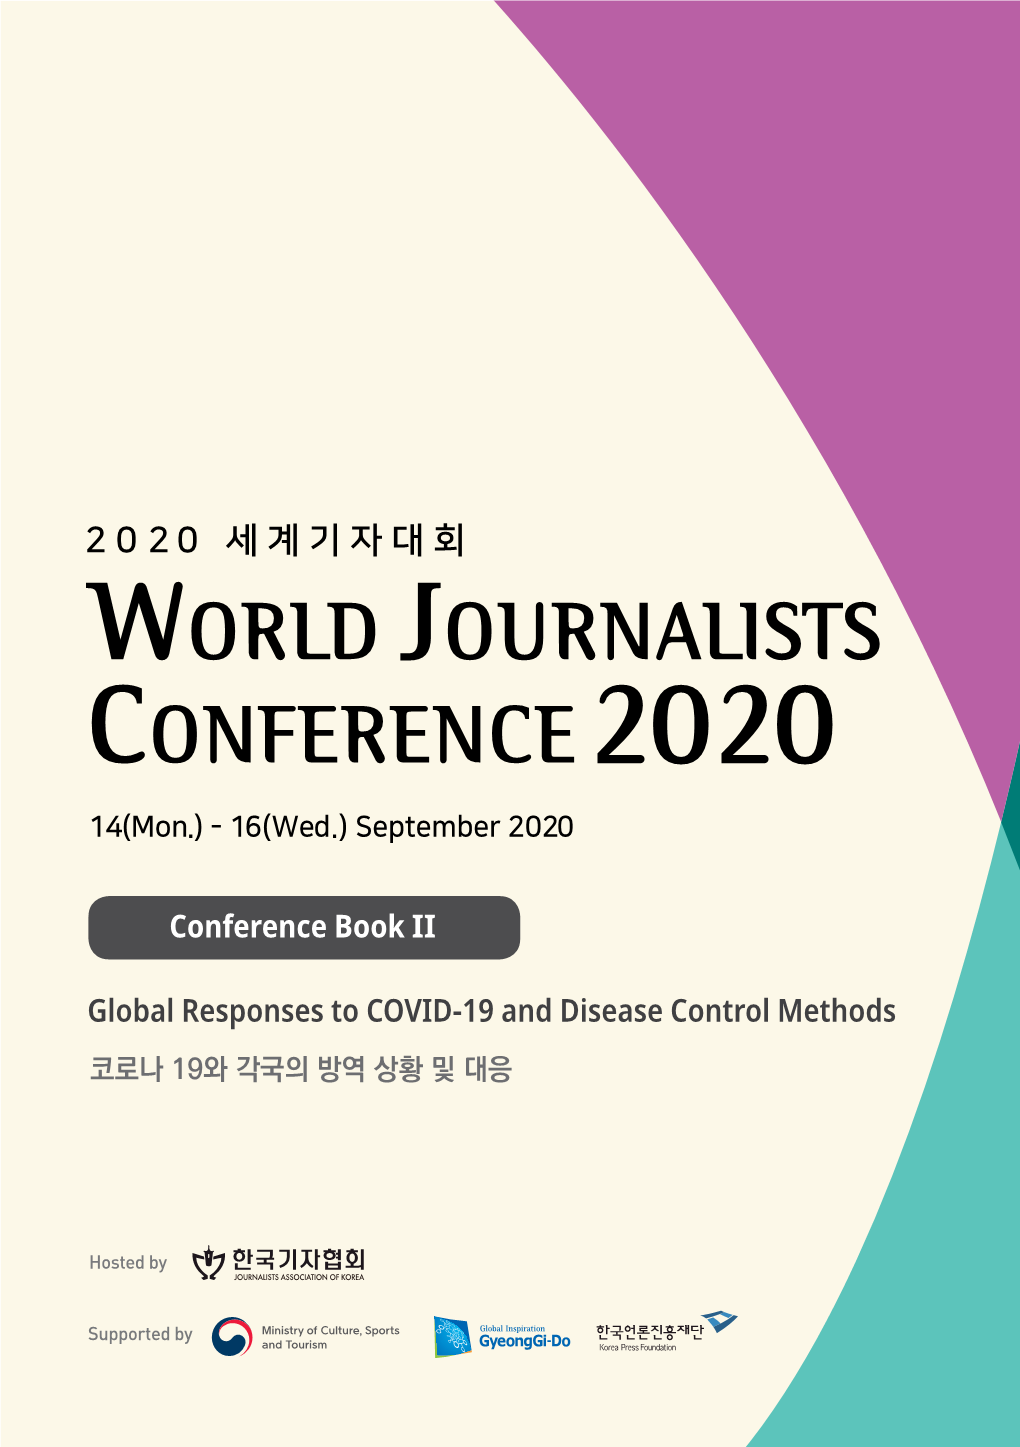 Global Responses to COVID-19 and Disease Control Methods 코로나 19와 각국의 방역 상황 및 대응 Contents